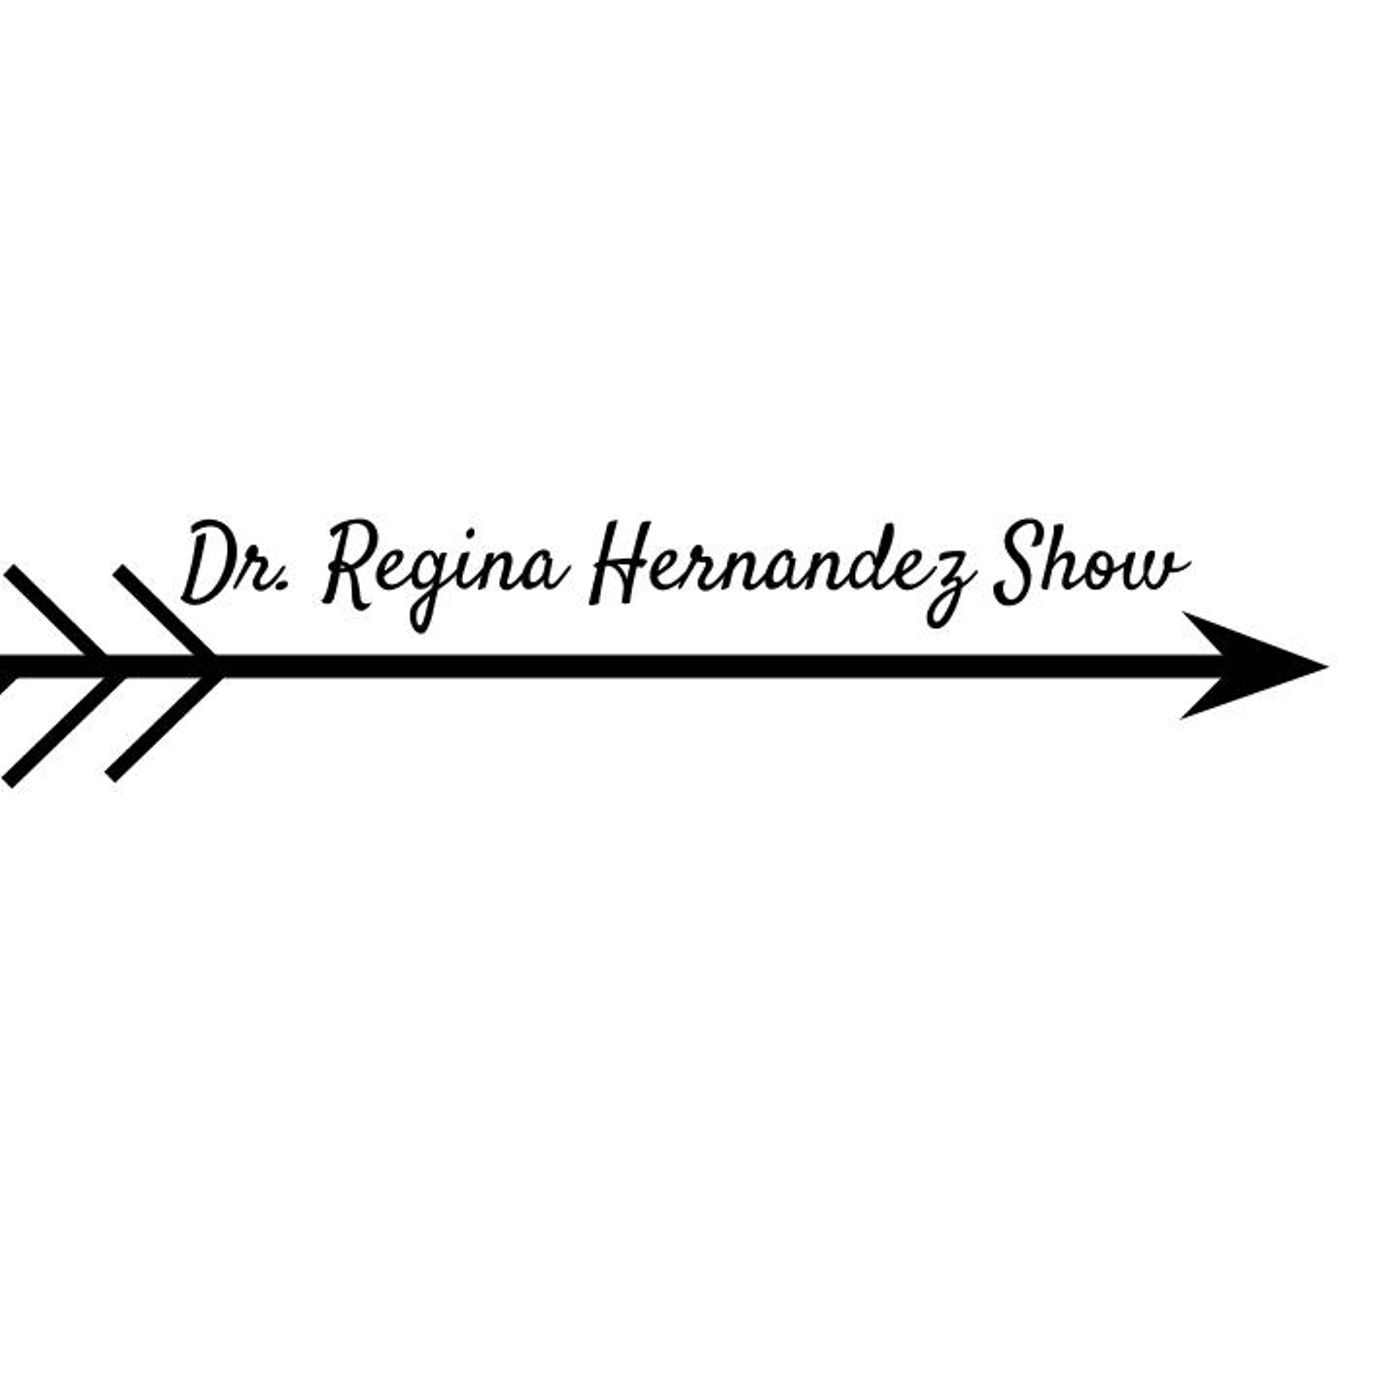 Dr. Regina Hernandez's show